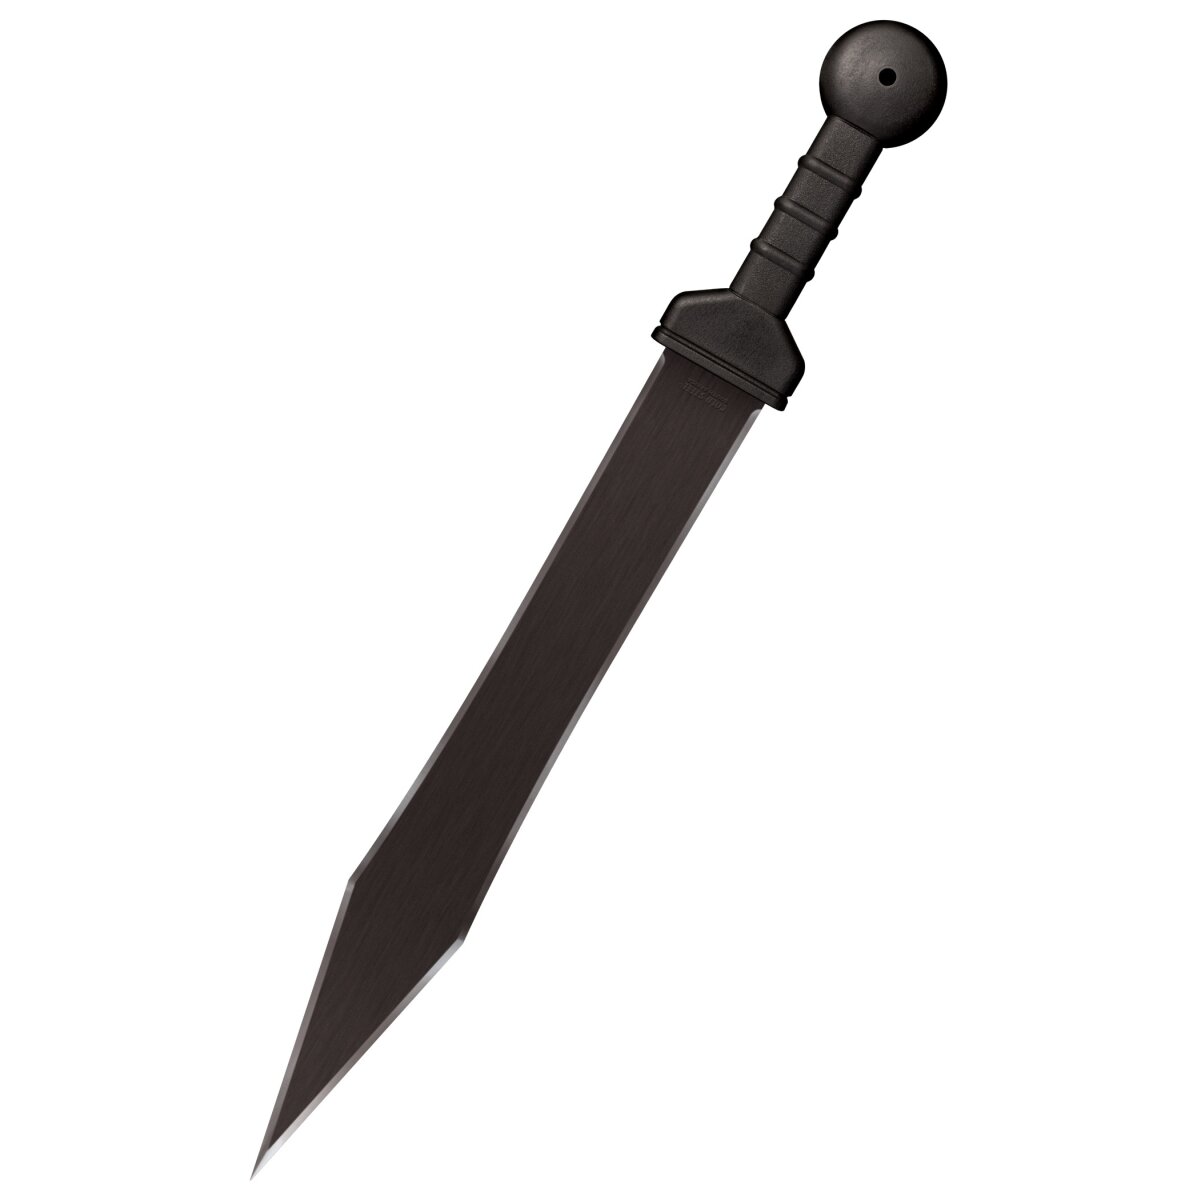 Gladius machete with scabbard